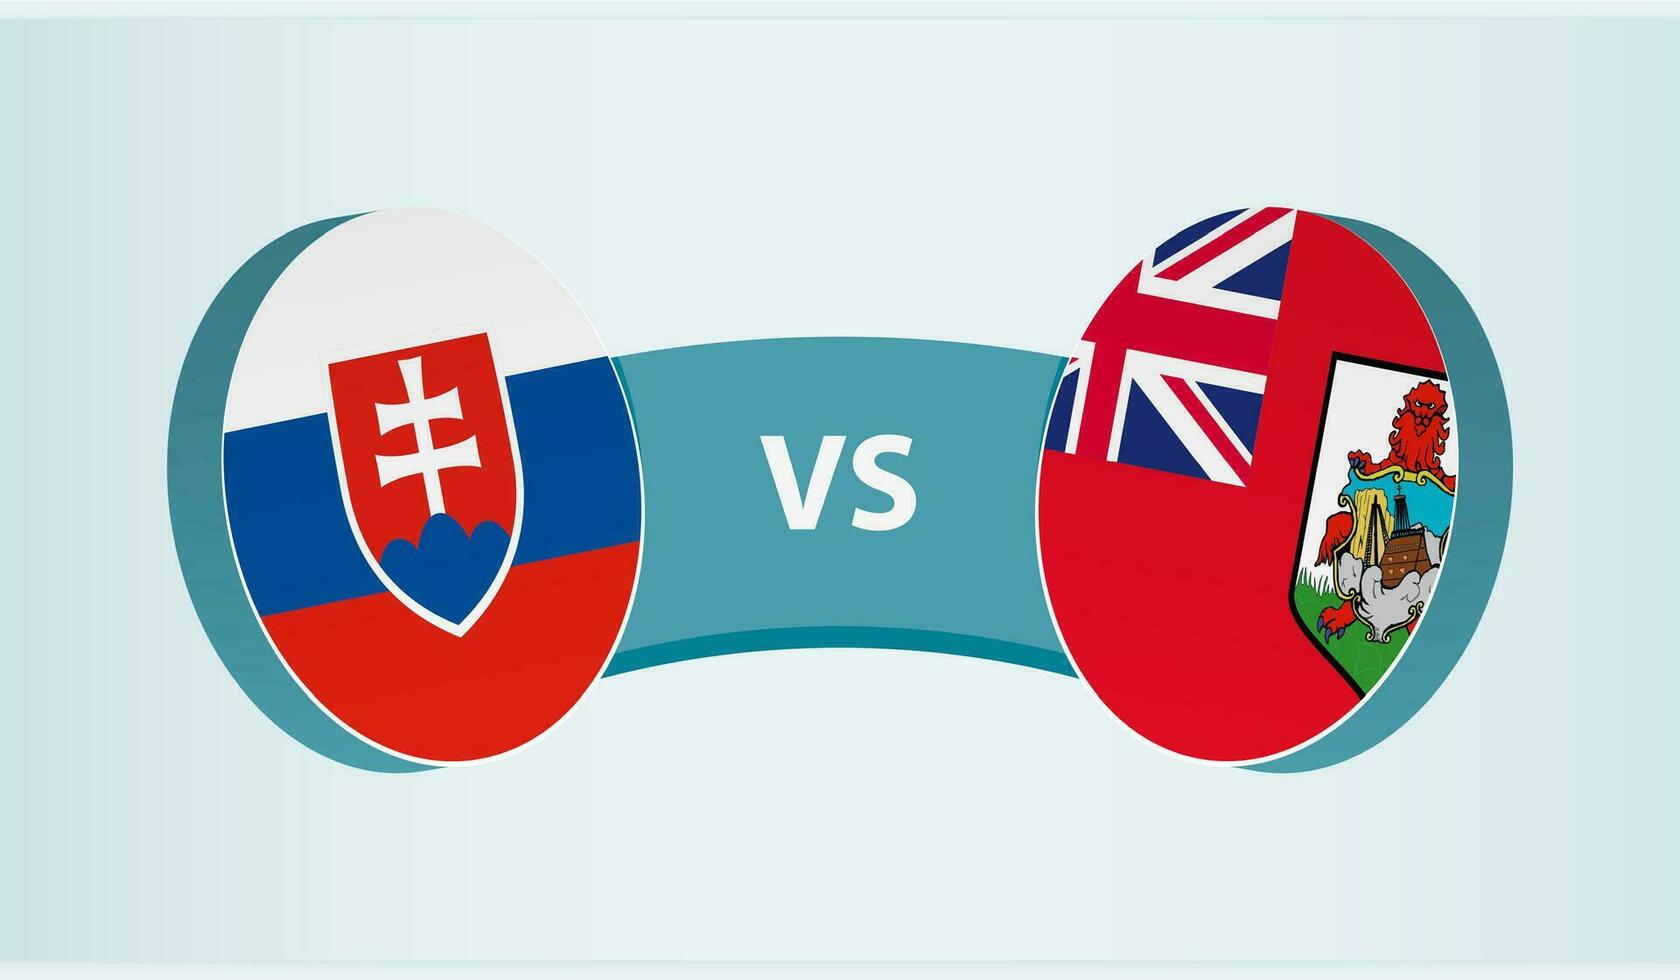 Slovakia versus Bermuda, team sports competition concept. vector